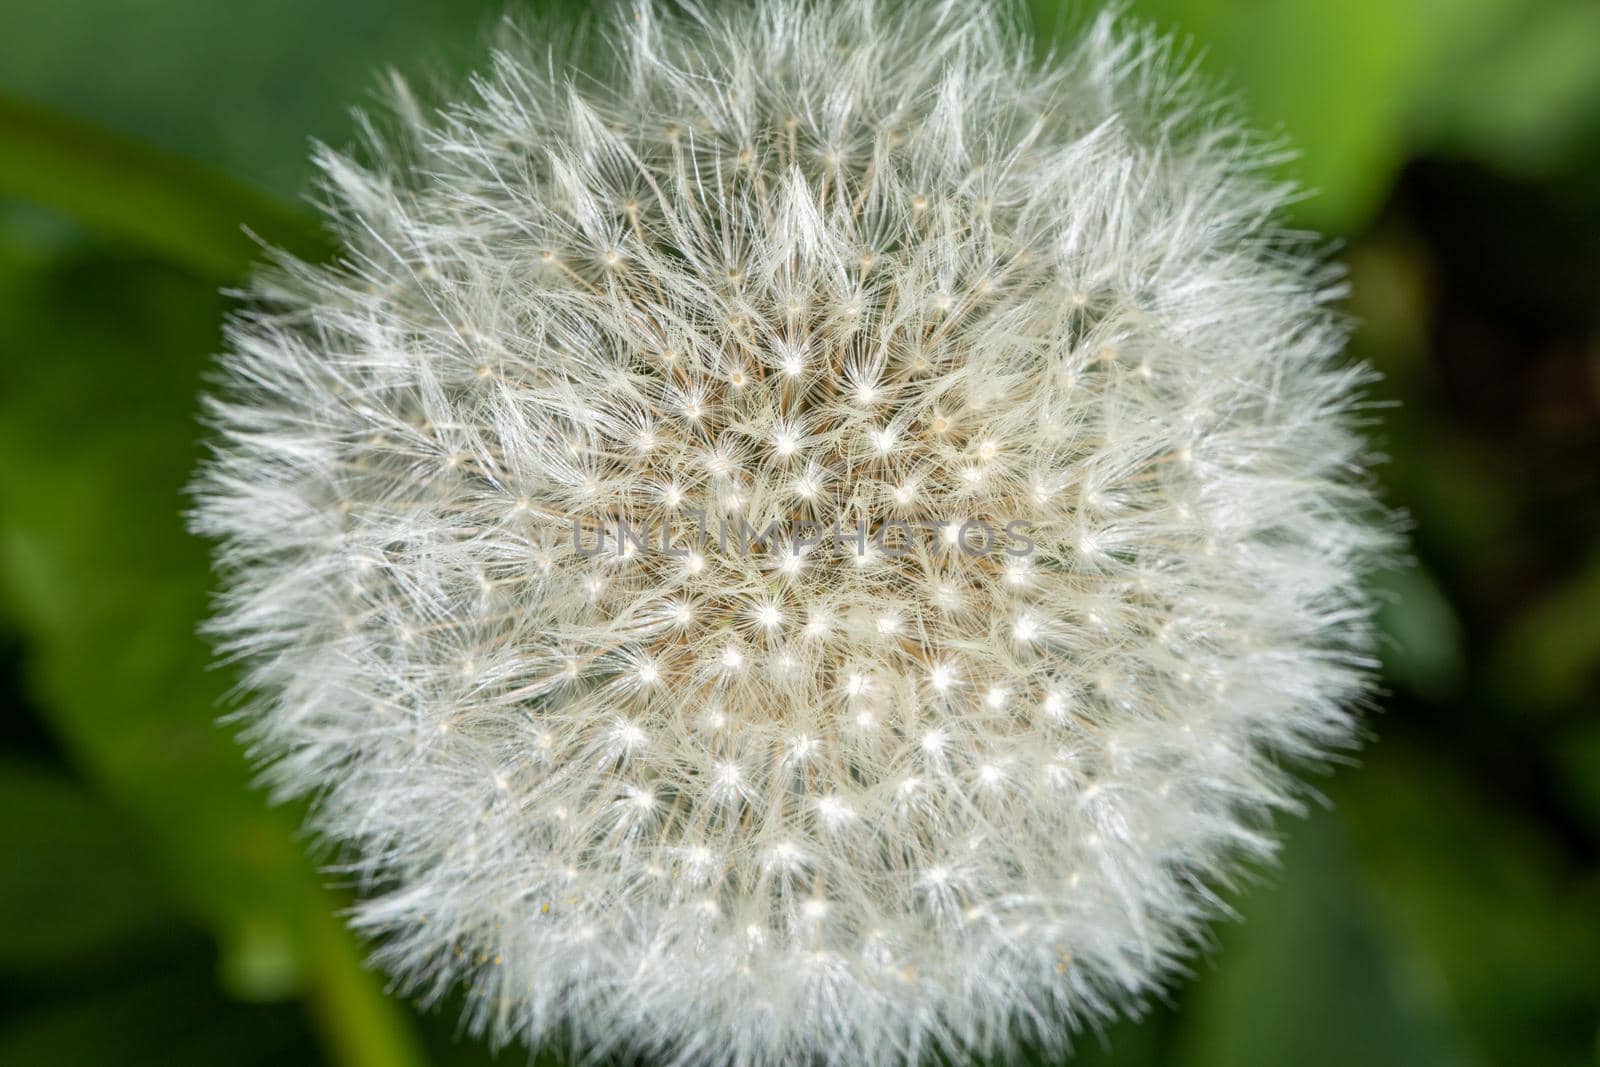 Fluffy flower head of dandelion on green background by clusterx